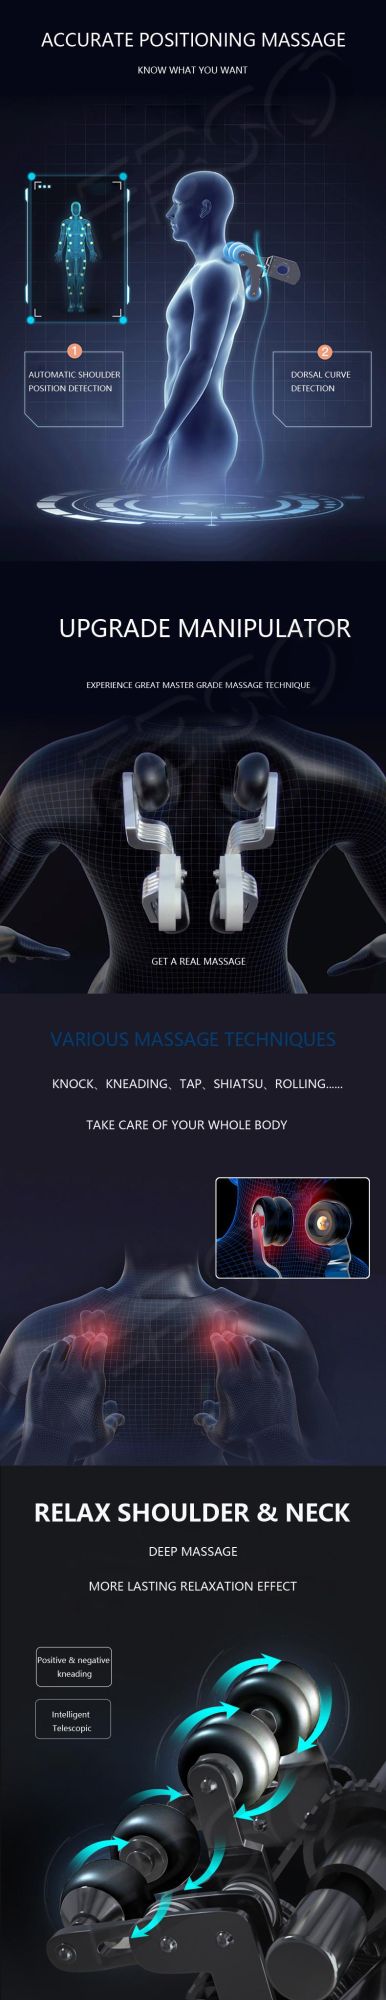 Full Body 3D Hand Electric Ai Smart Recliner SL Track Zero Gravity Shiatsu Massage Chair with Speaker